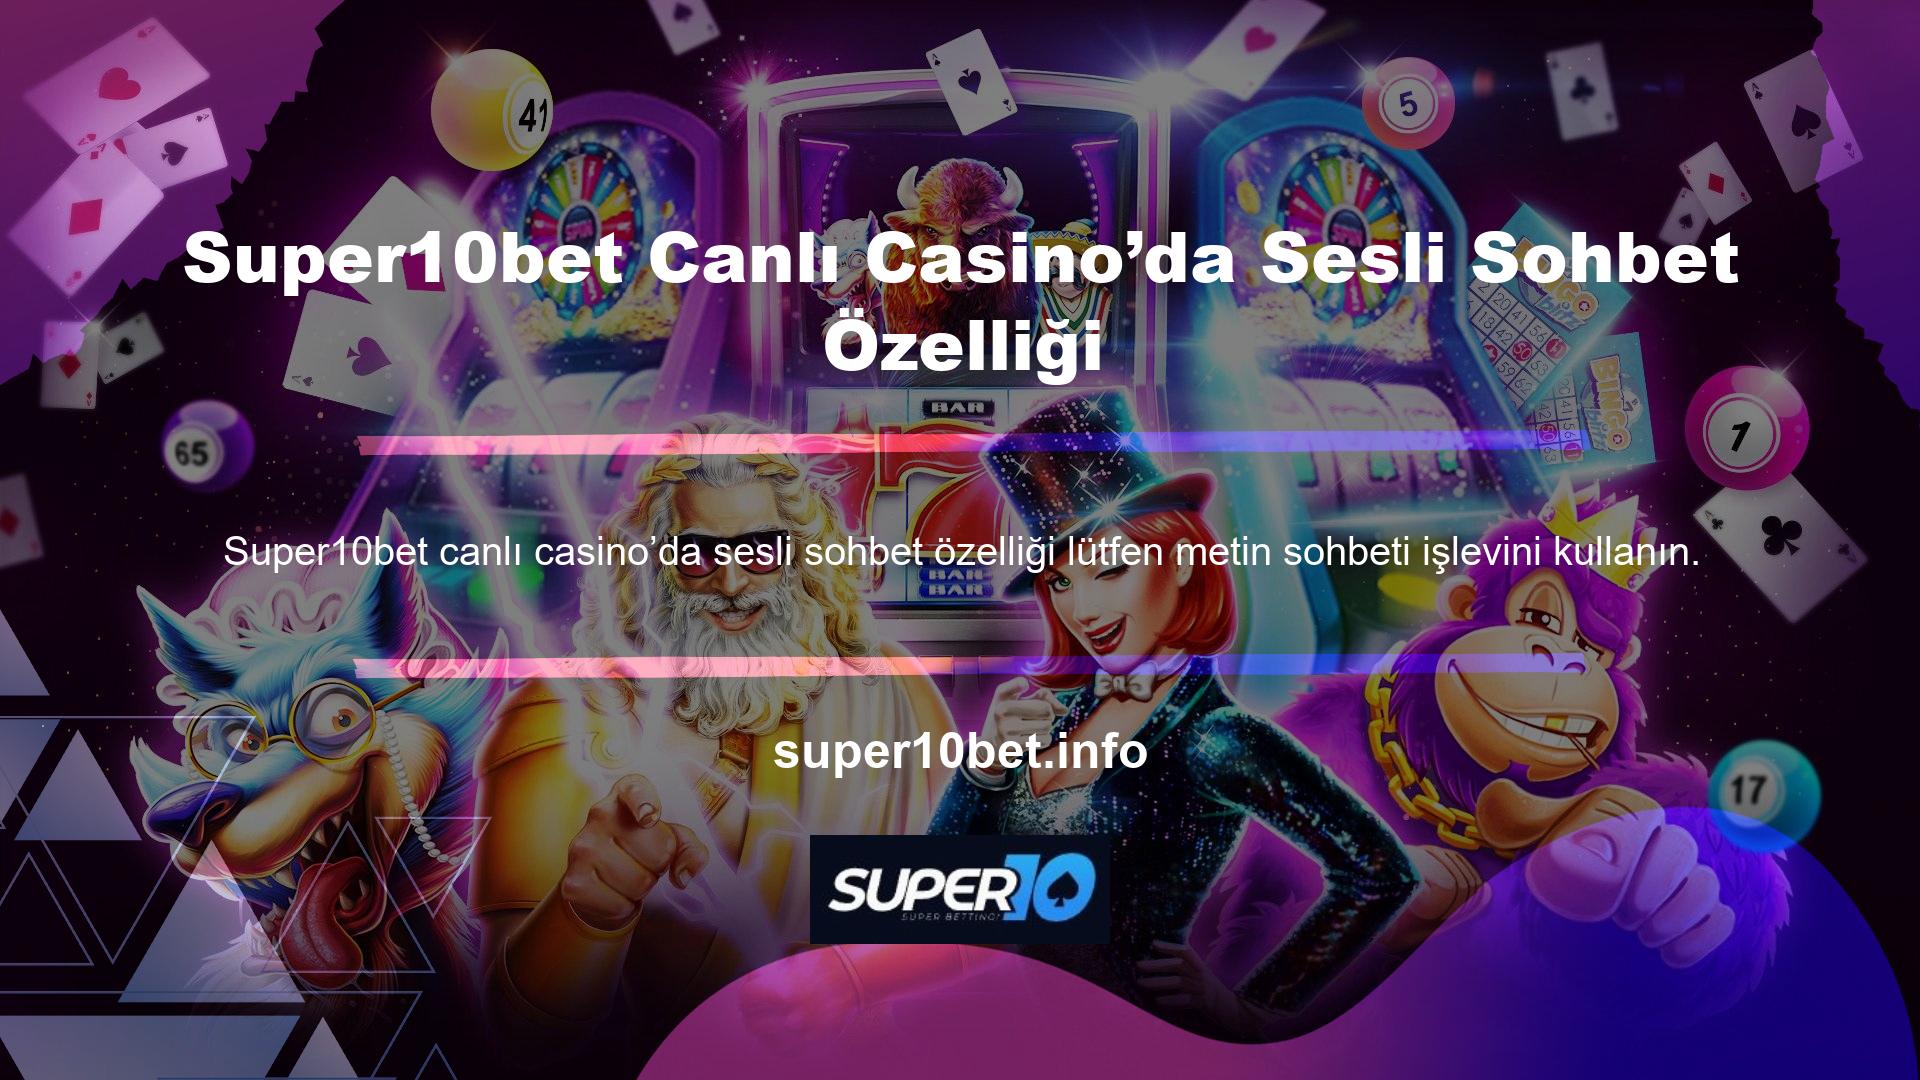 Super10bet canlı casino’da sesli sohbet özelliği Sesli sohbet işlevi de mevcuttur